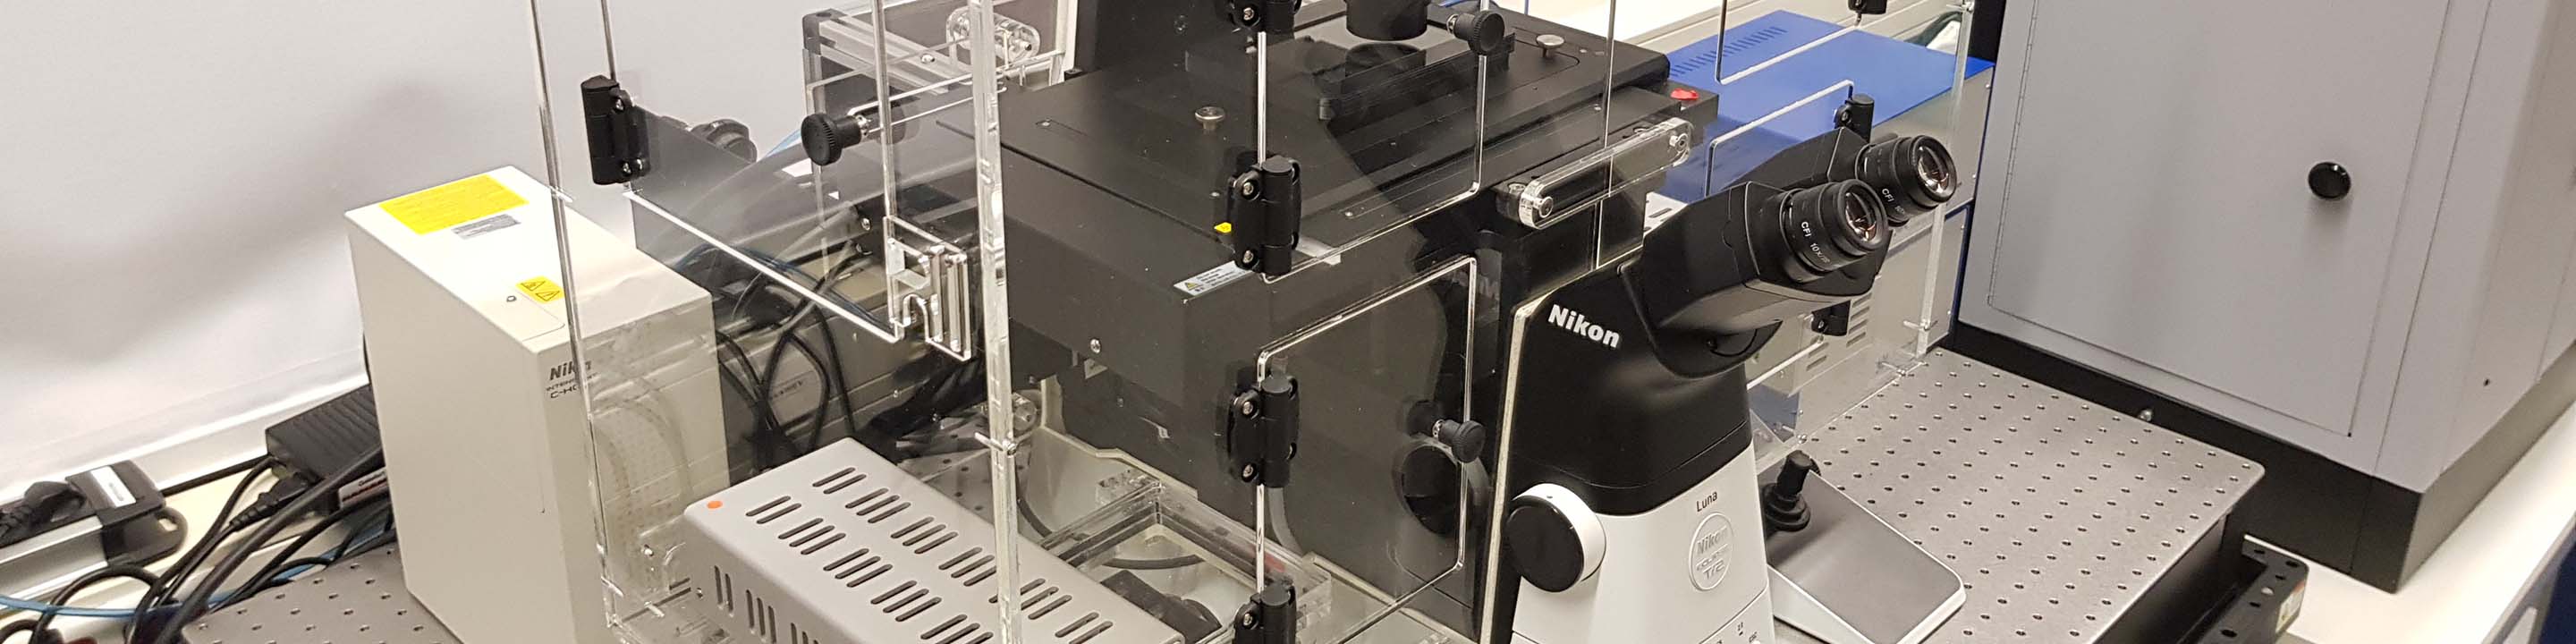 Microscope Heaters Image